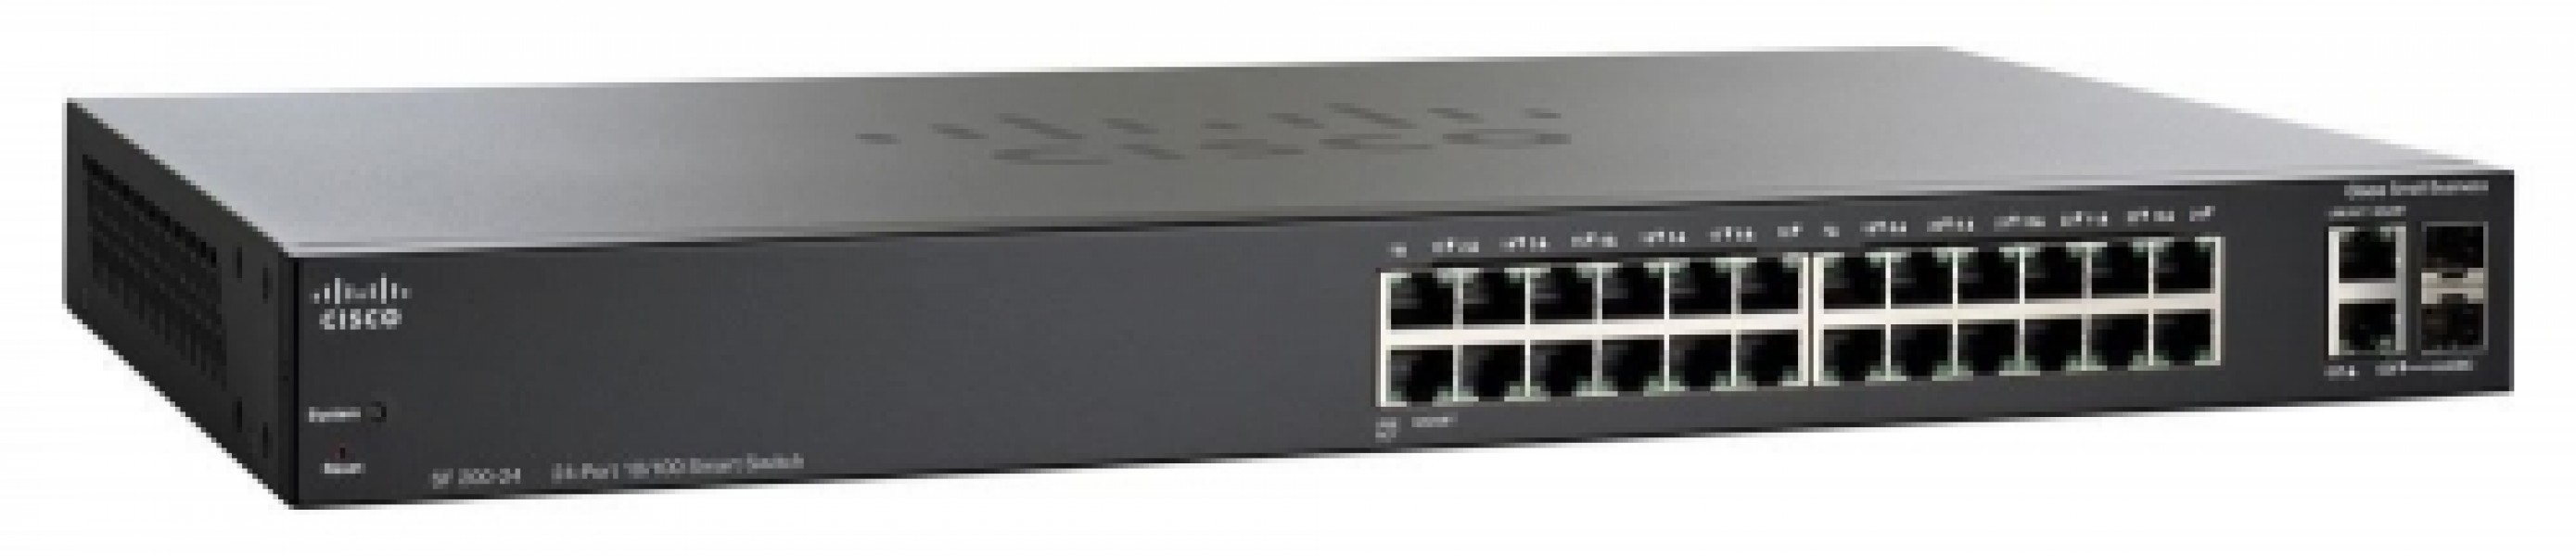 Cisco SLM224GT SF200-24 24-Port 10/100 Smart Switch